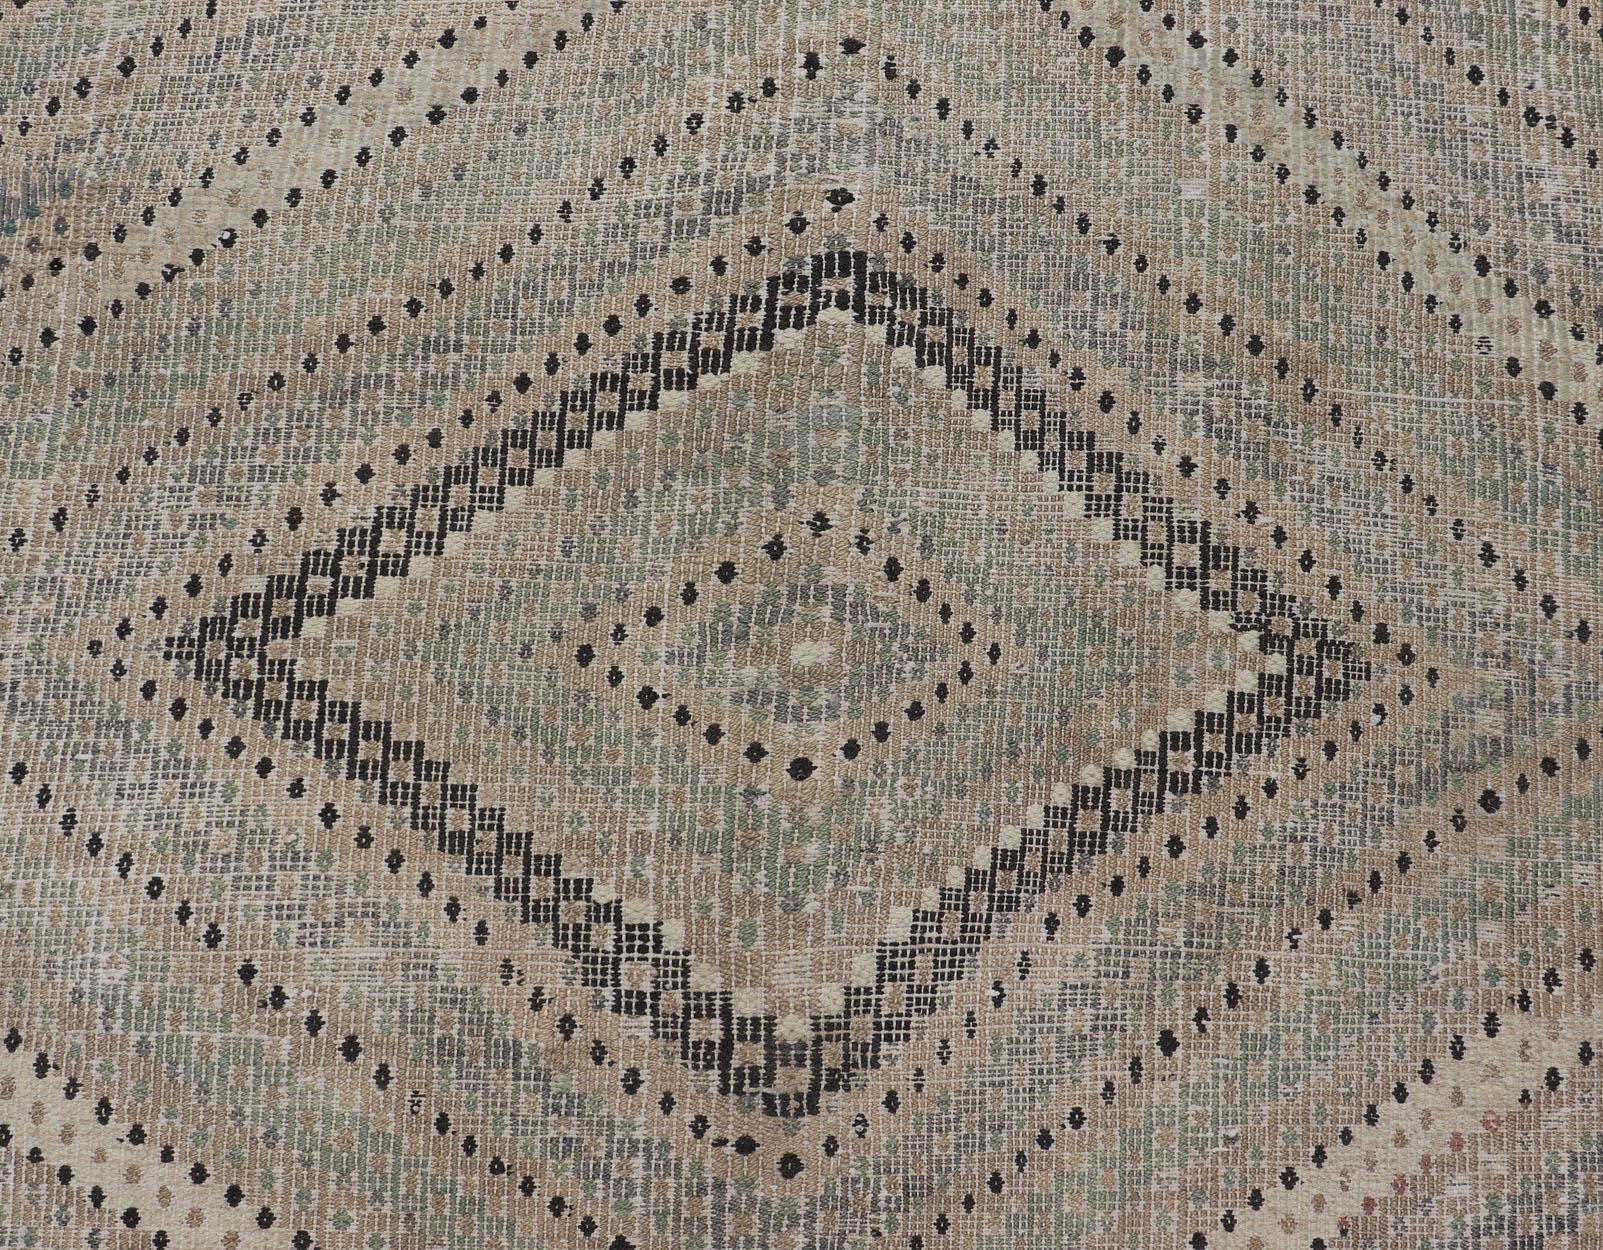 Vintage Turkish Embroidered Flat-Weave Rug with Geometric Design. 
Keivan Woven Arts- Geometric design vintage Kilim gallery rug from Turkey rug EN-111006, country of origin / type: Turkey / Kilim, circa 1950.
Measures: 7'4 x 10'6 
Featuring a